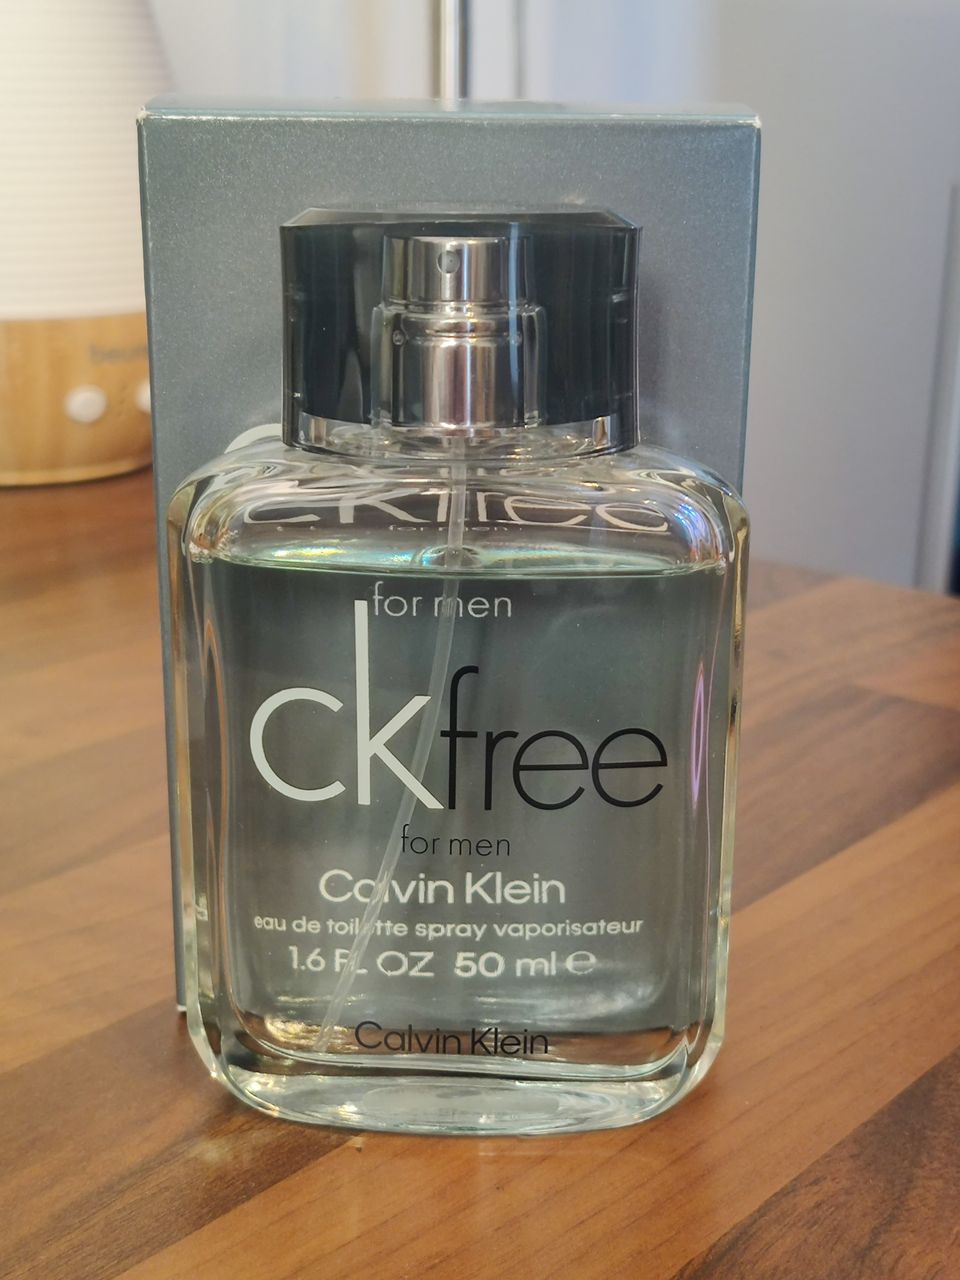 CK Free for men by Calvin Klein 50 ml